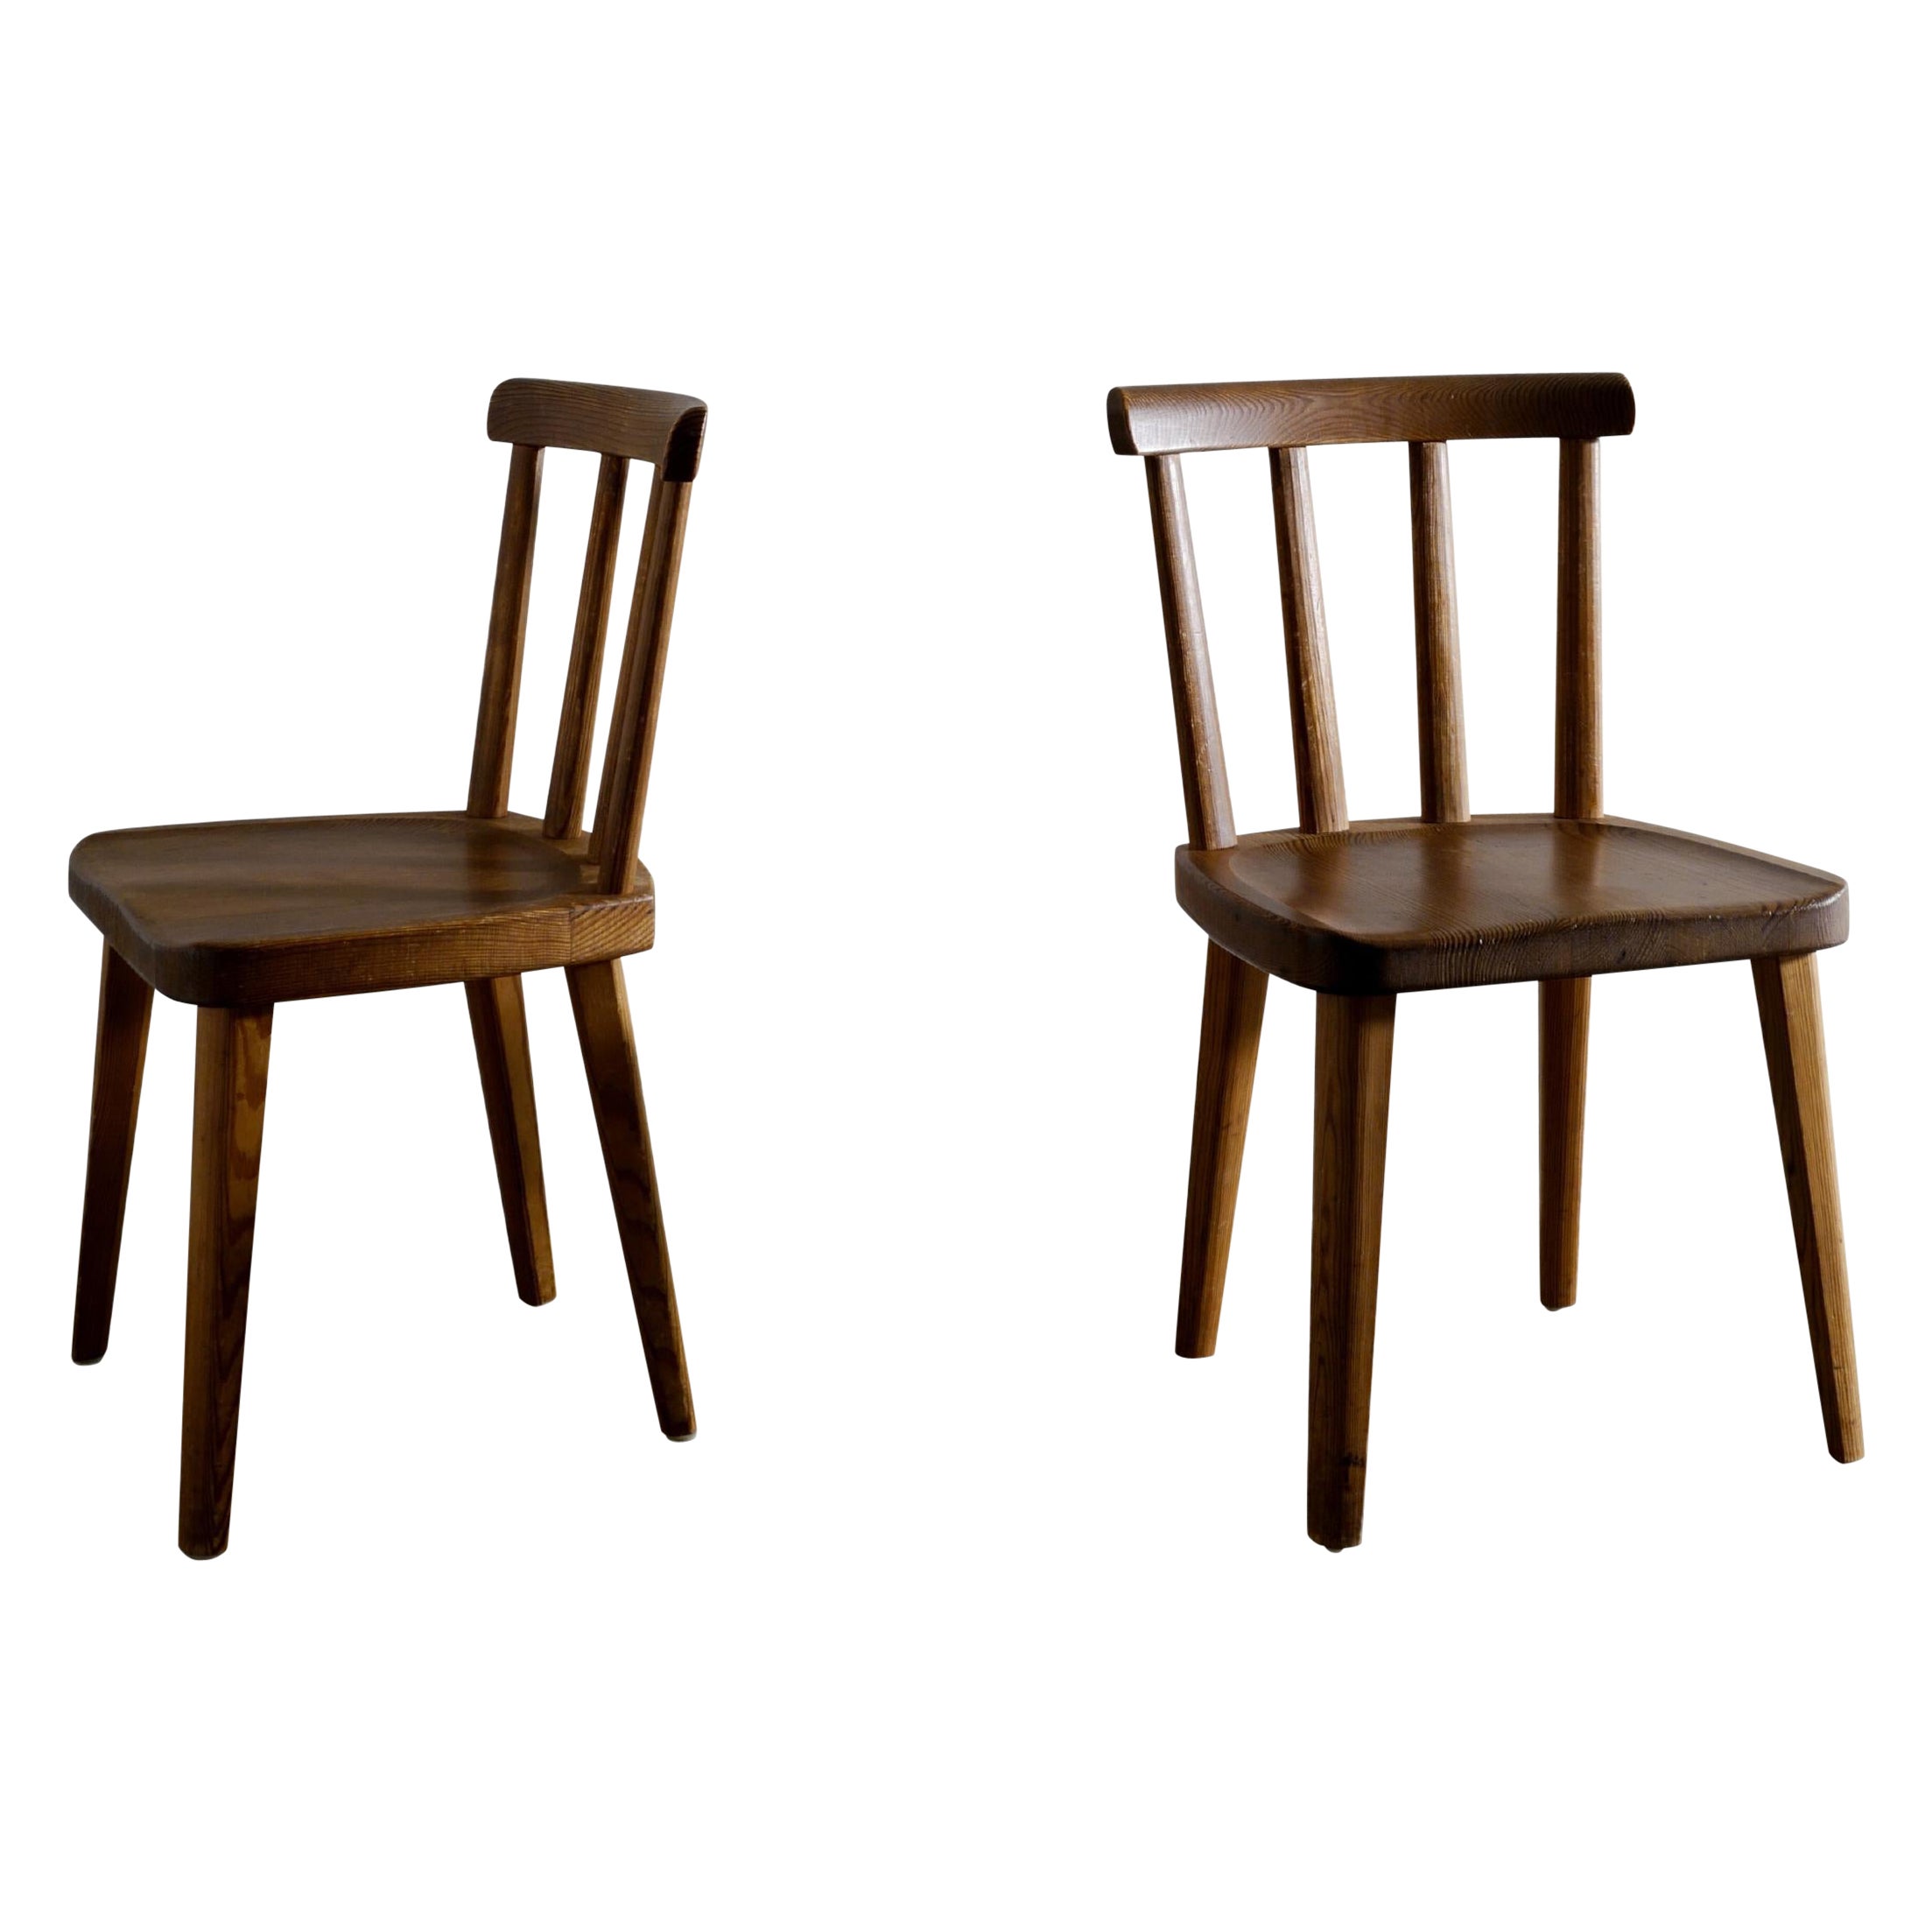 Pair of Utö Dining Chairs by Axel Einar Hjorth for Nordiska Kompaniet 1930s